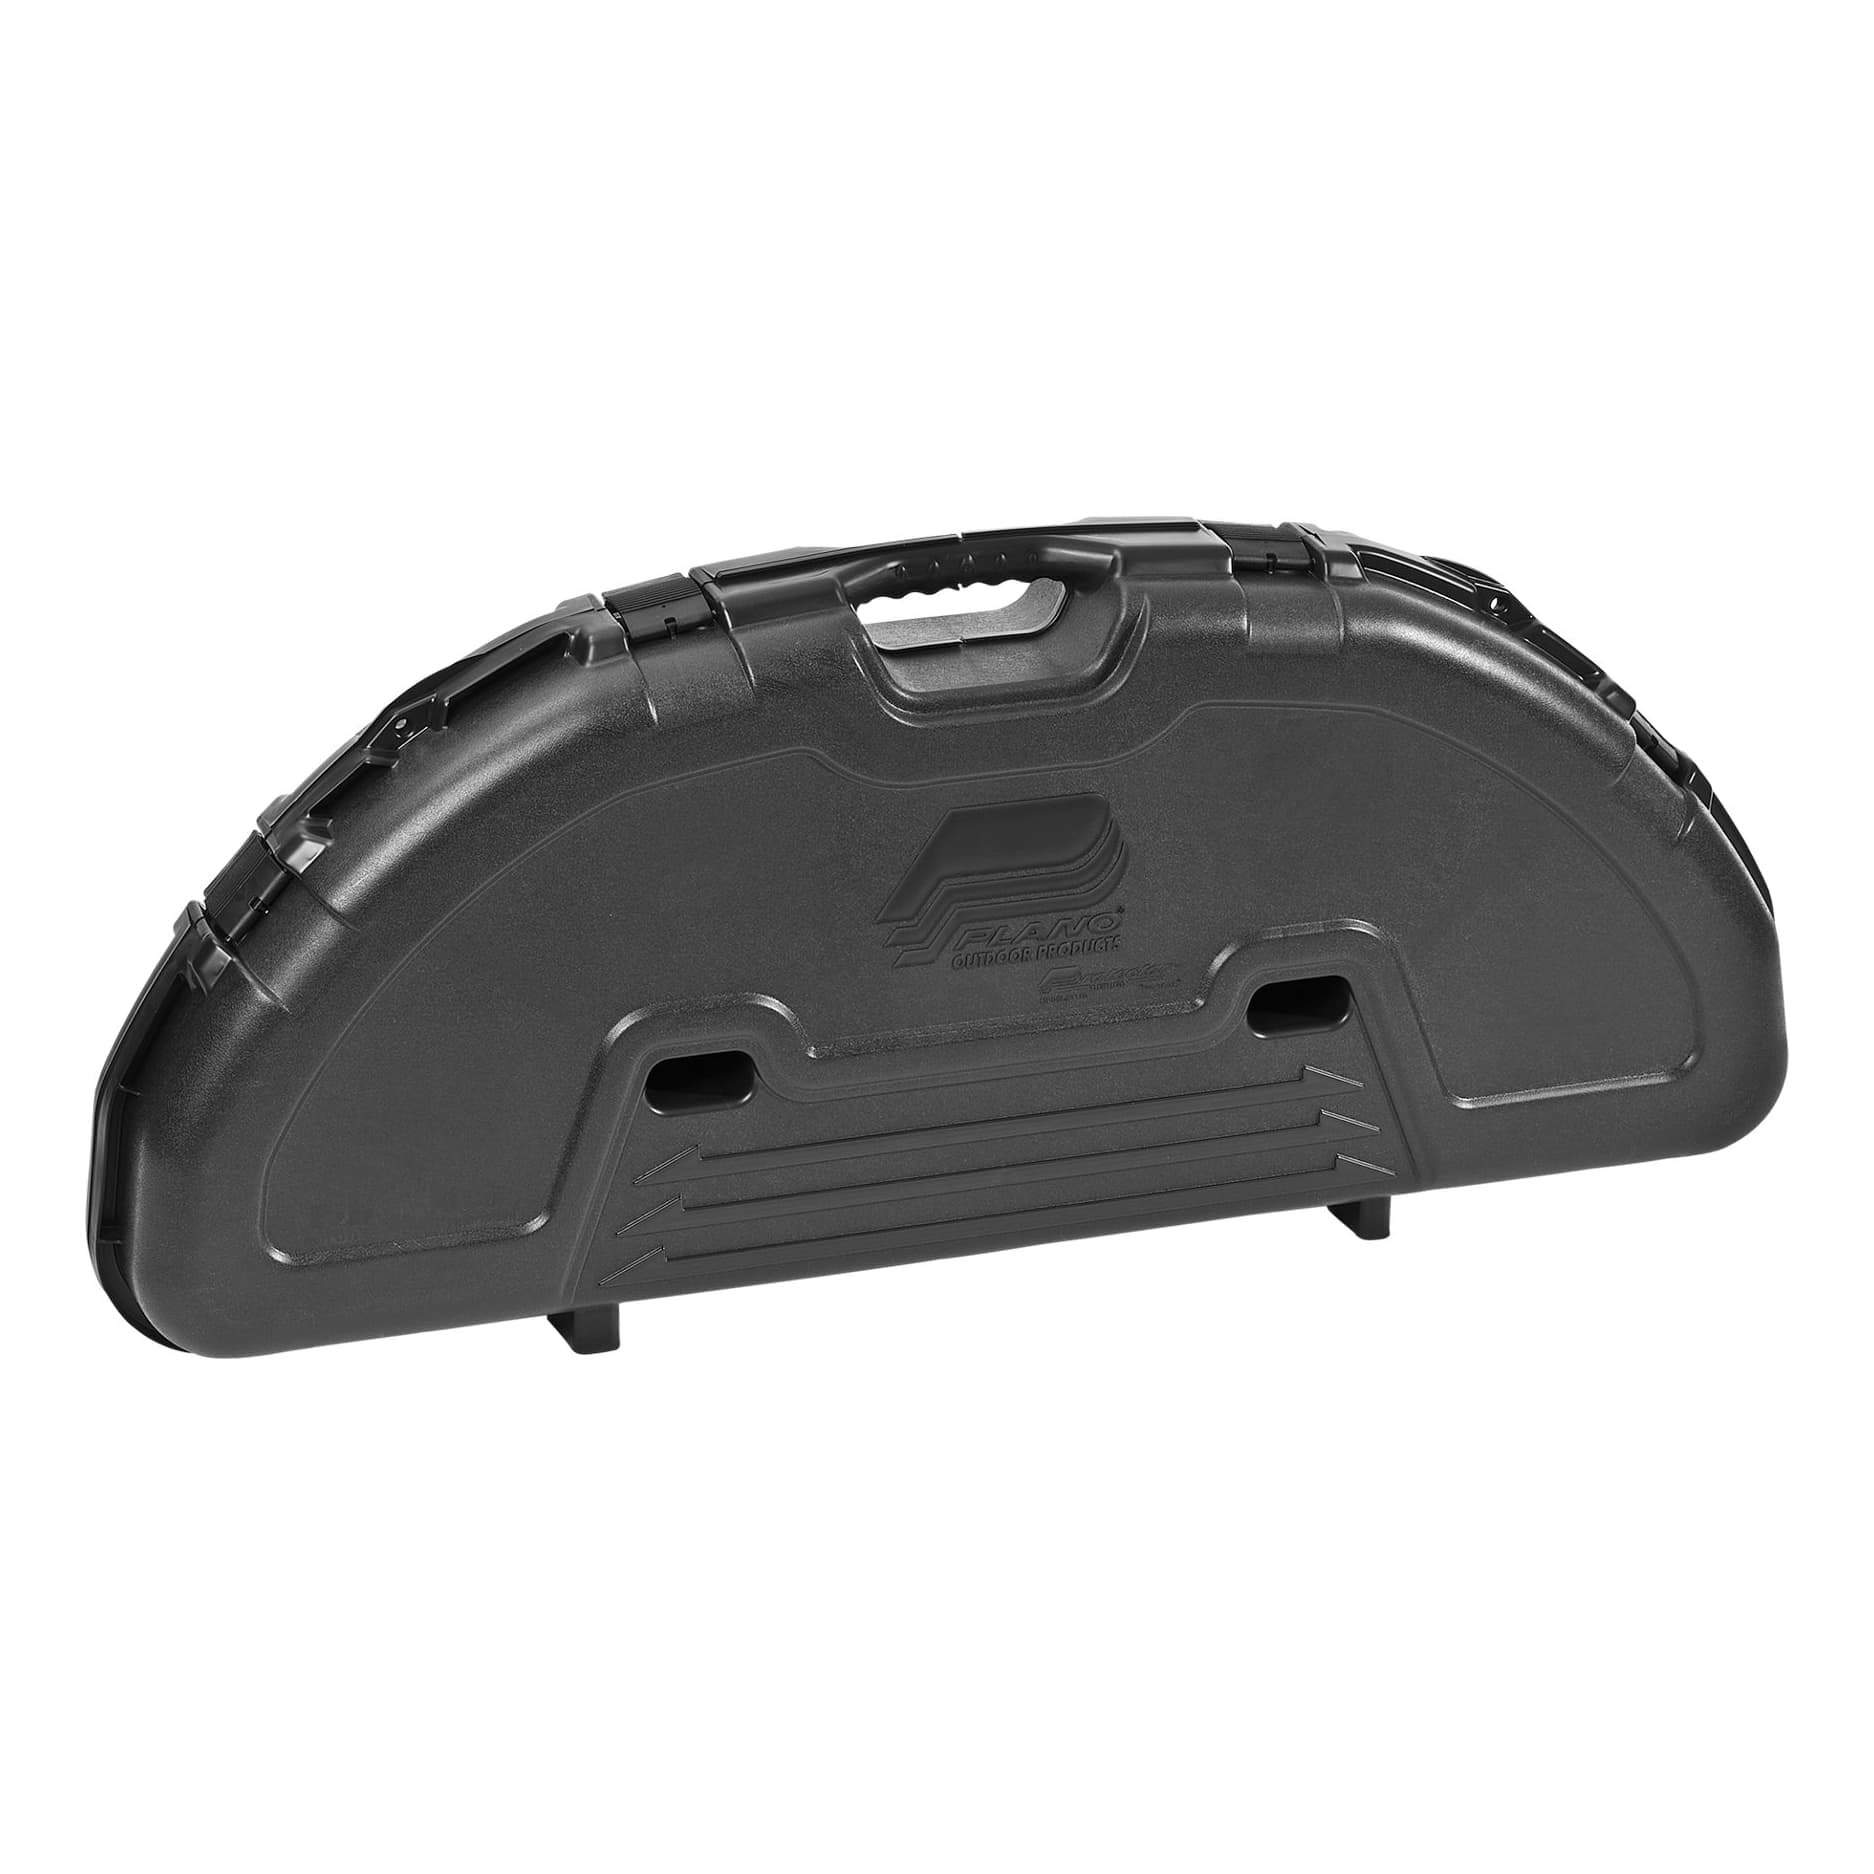 Plano® Protector Compact Bow Case